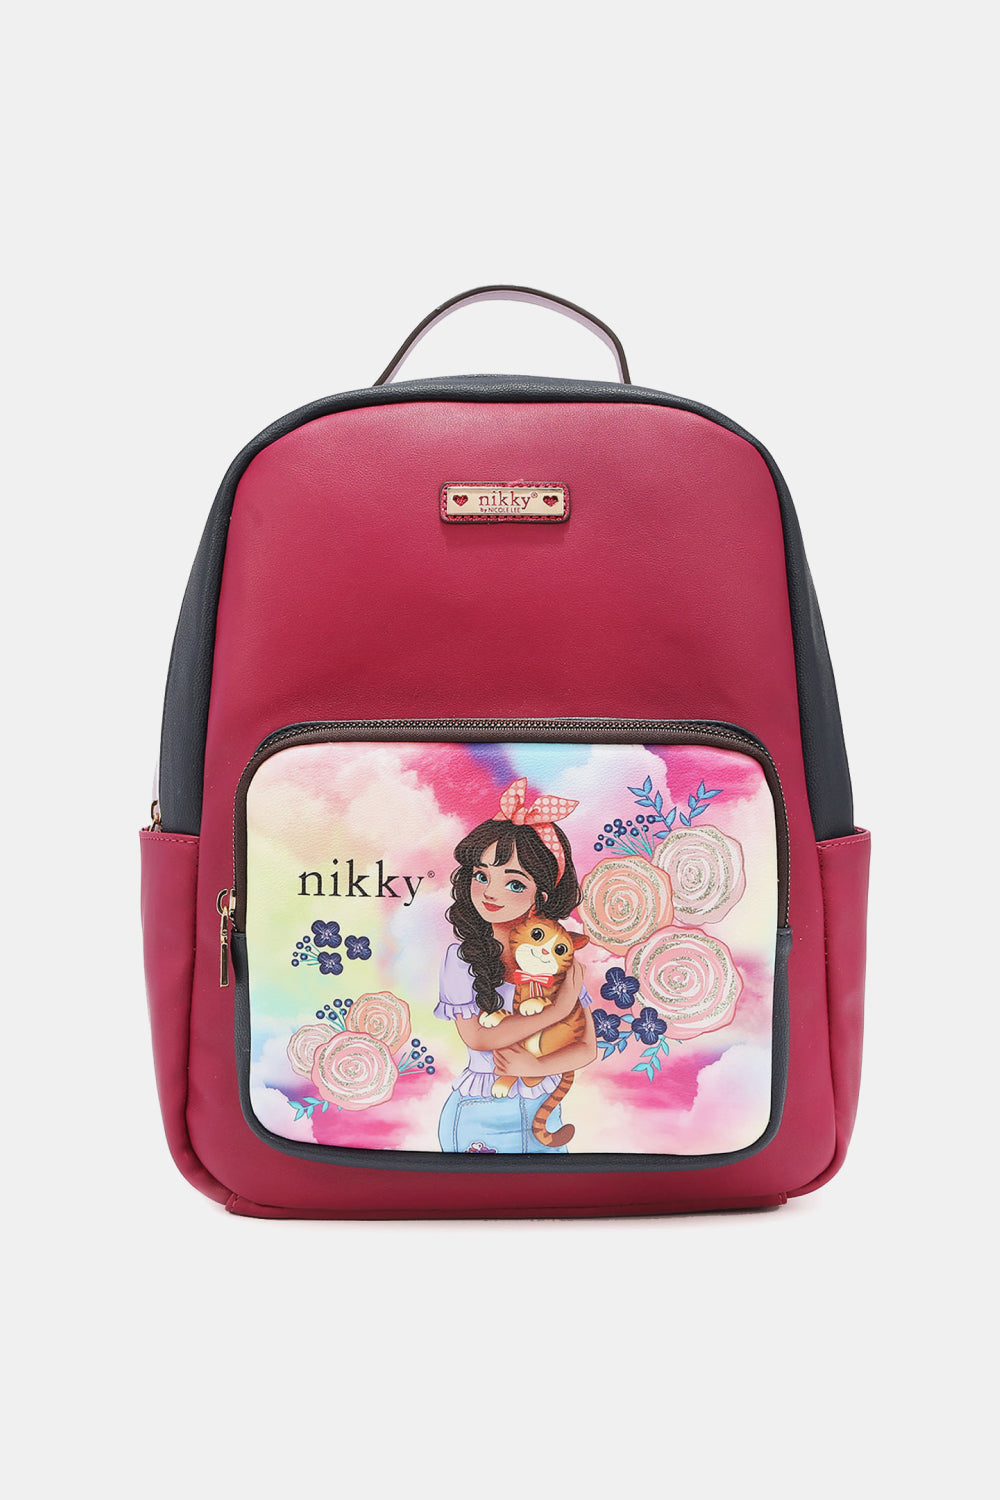 Nicole Lee USA Nikky Fashion Backpack Multi Style